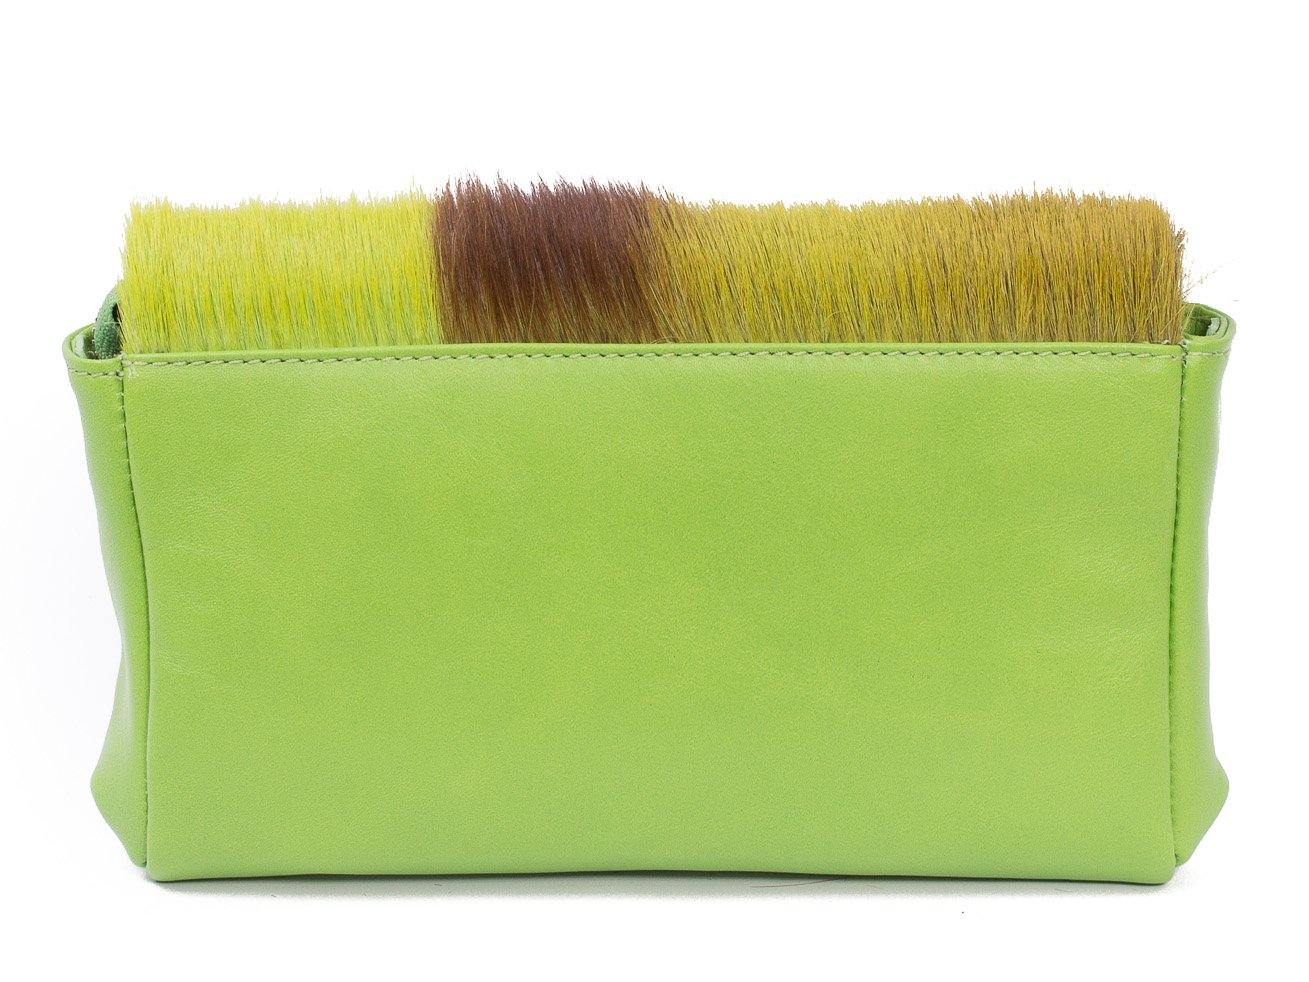 sherene melinda springbok hair-on-hide lime green leather Sophy SS18 Clutch Bag Stripe back